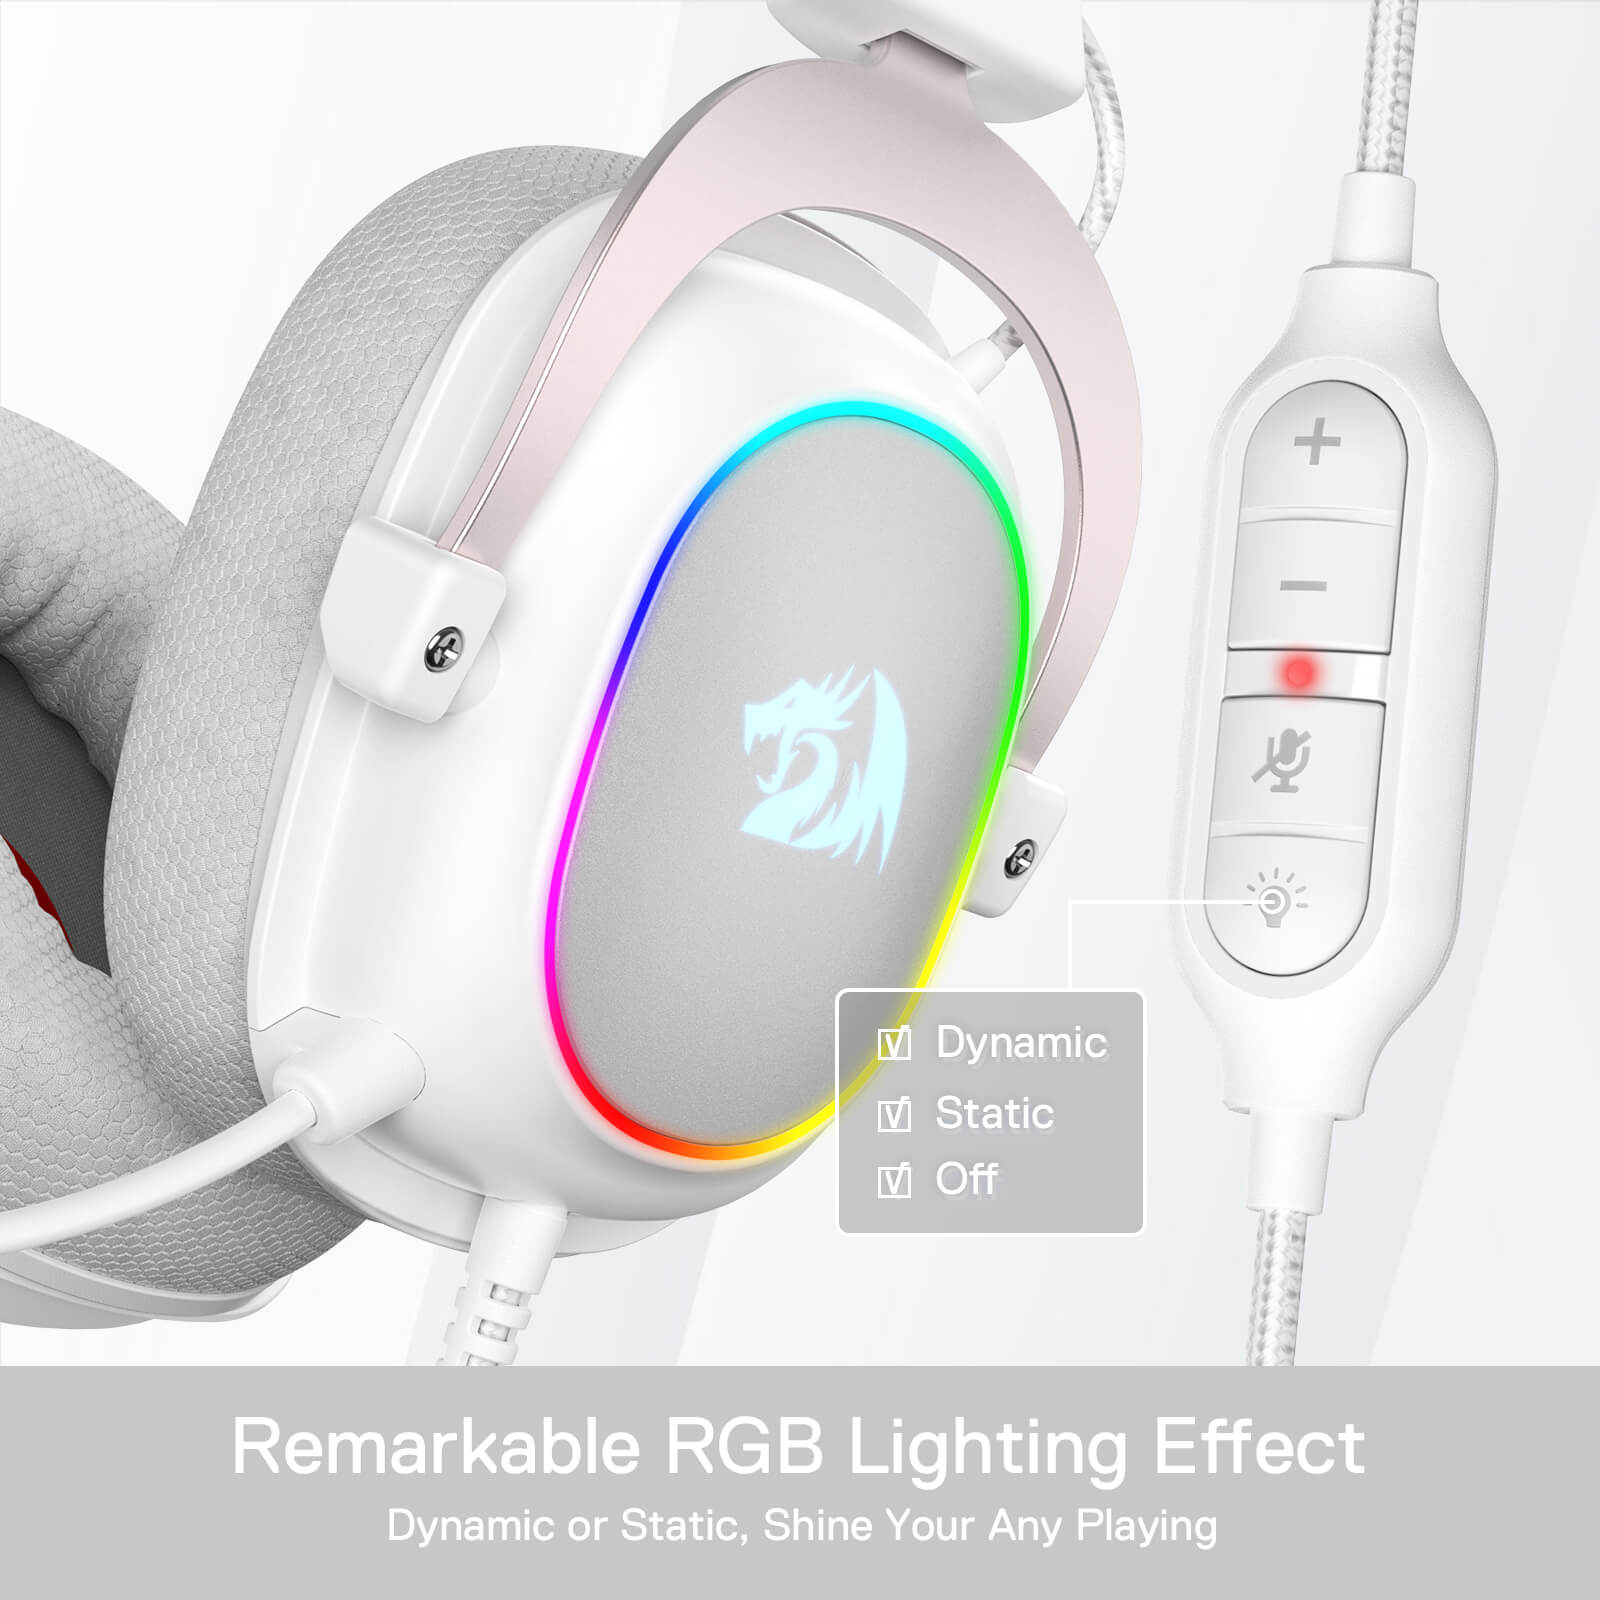 Redragon H510 Zeus-X RGB White Wired Gaming Headset - 7.1 Surround Sound